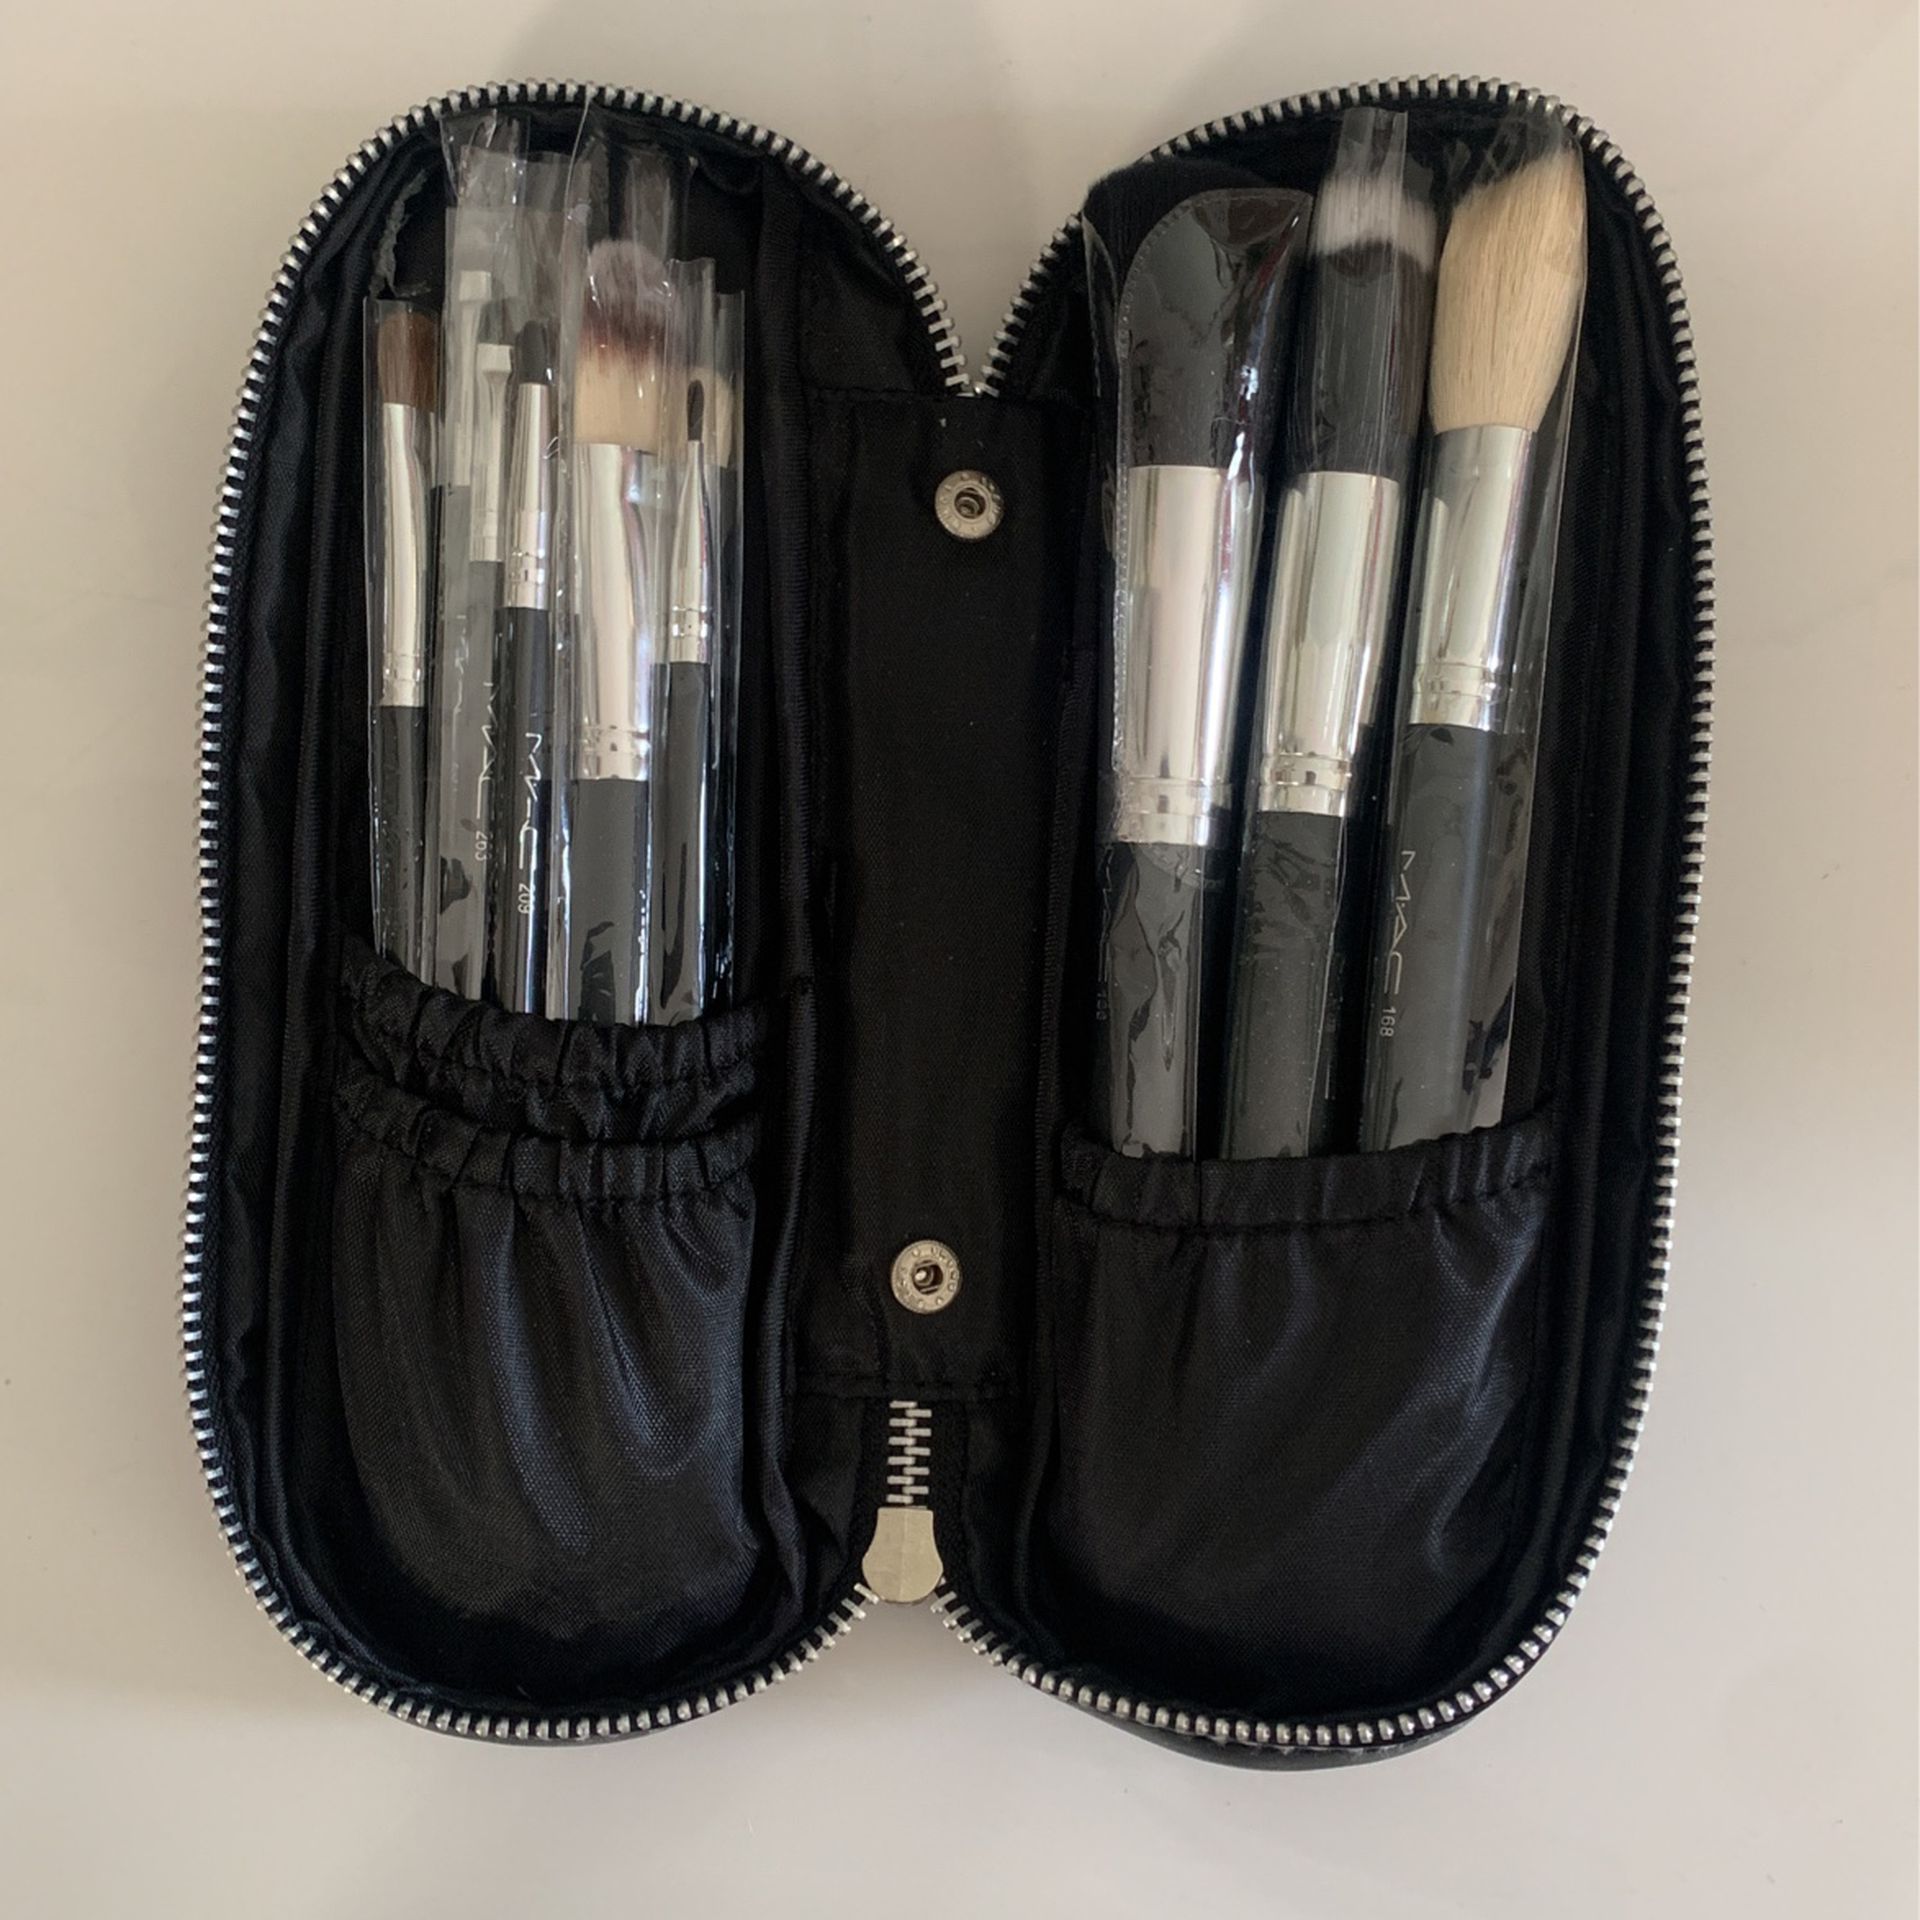 Mac 12 Brush Set